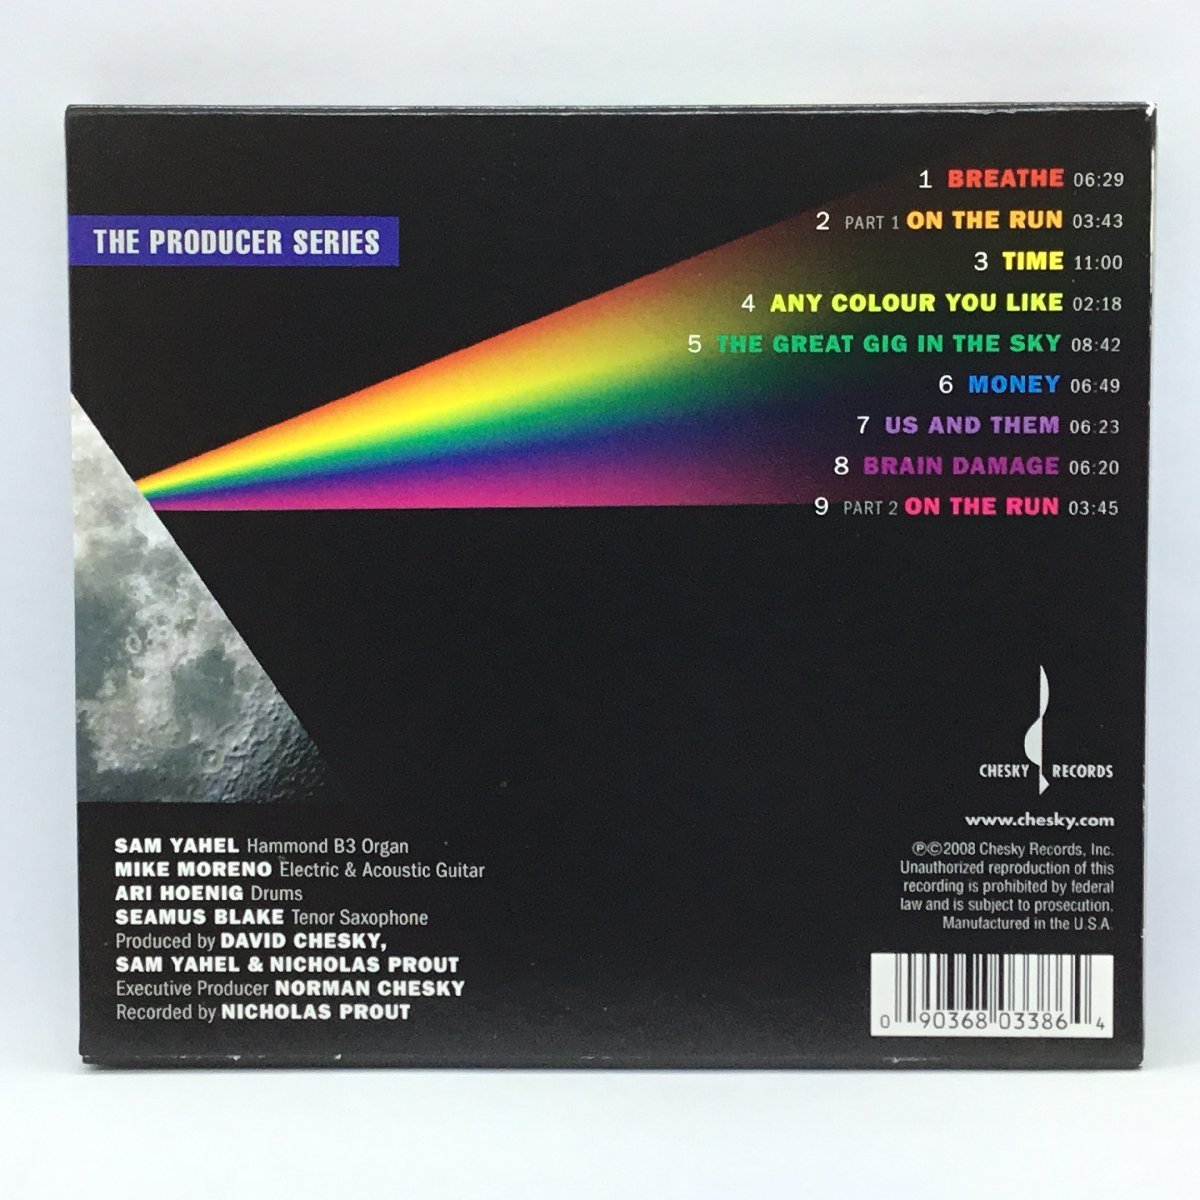 SACDハイブリッド◇Sam Yahel, Ari Hoenig, Mike Moreno, Seamus Blake / Jazz Side Of The Moon (The Music Of Pink Floyd) (SACD HYBRID)の画像2